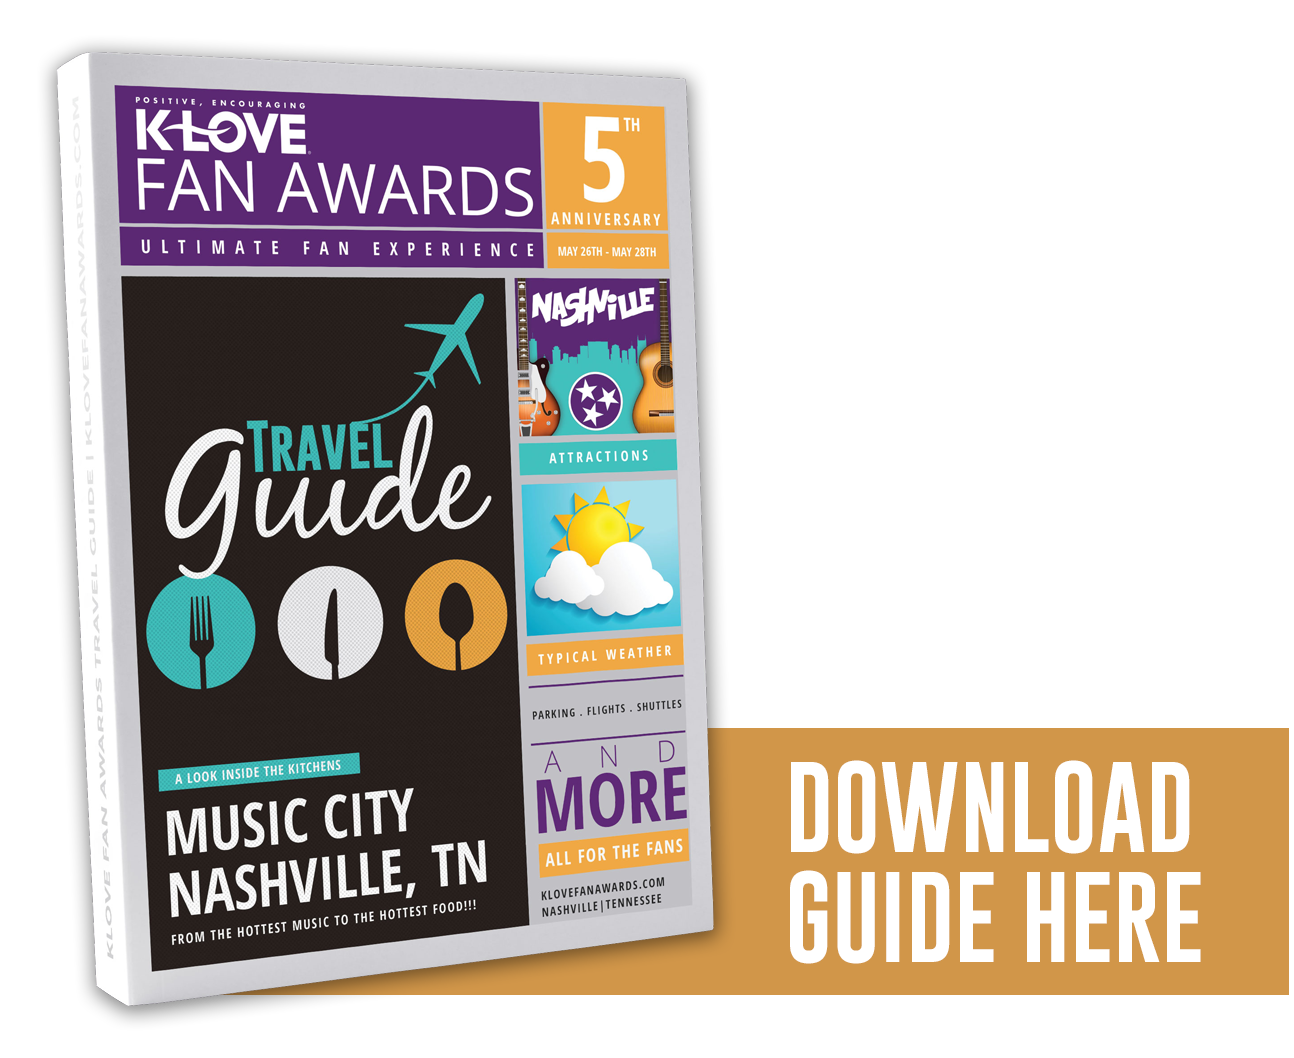 Nashville Travel Guide